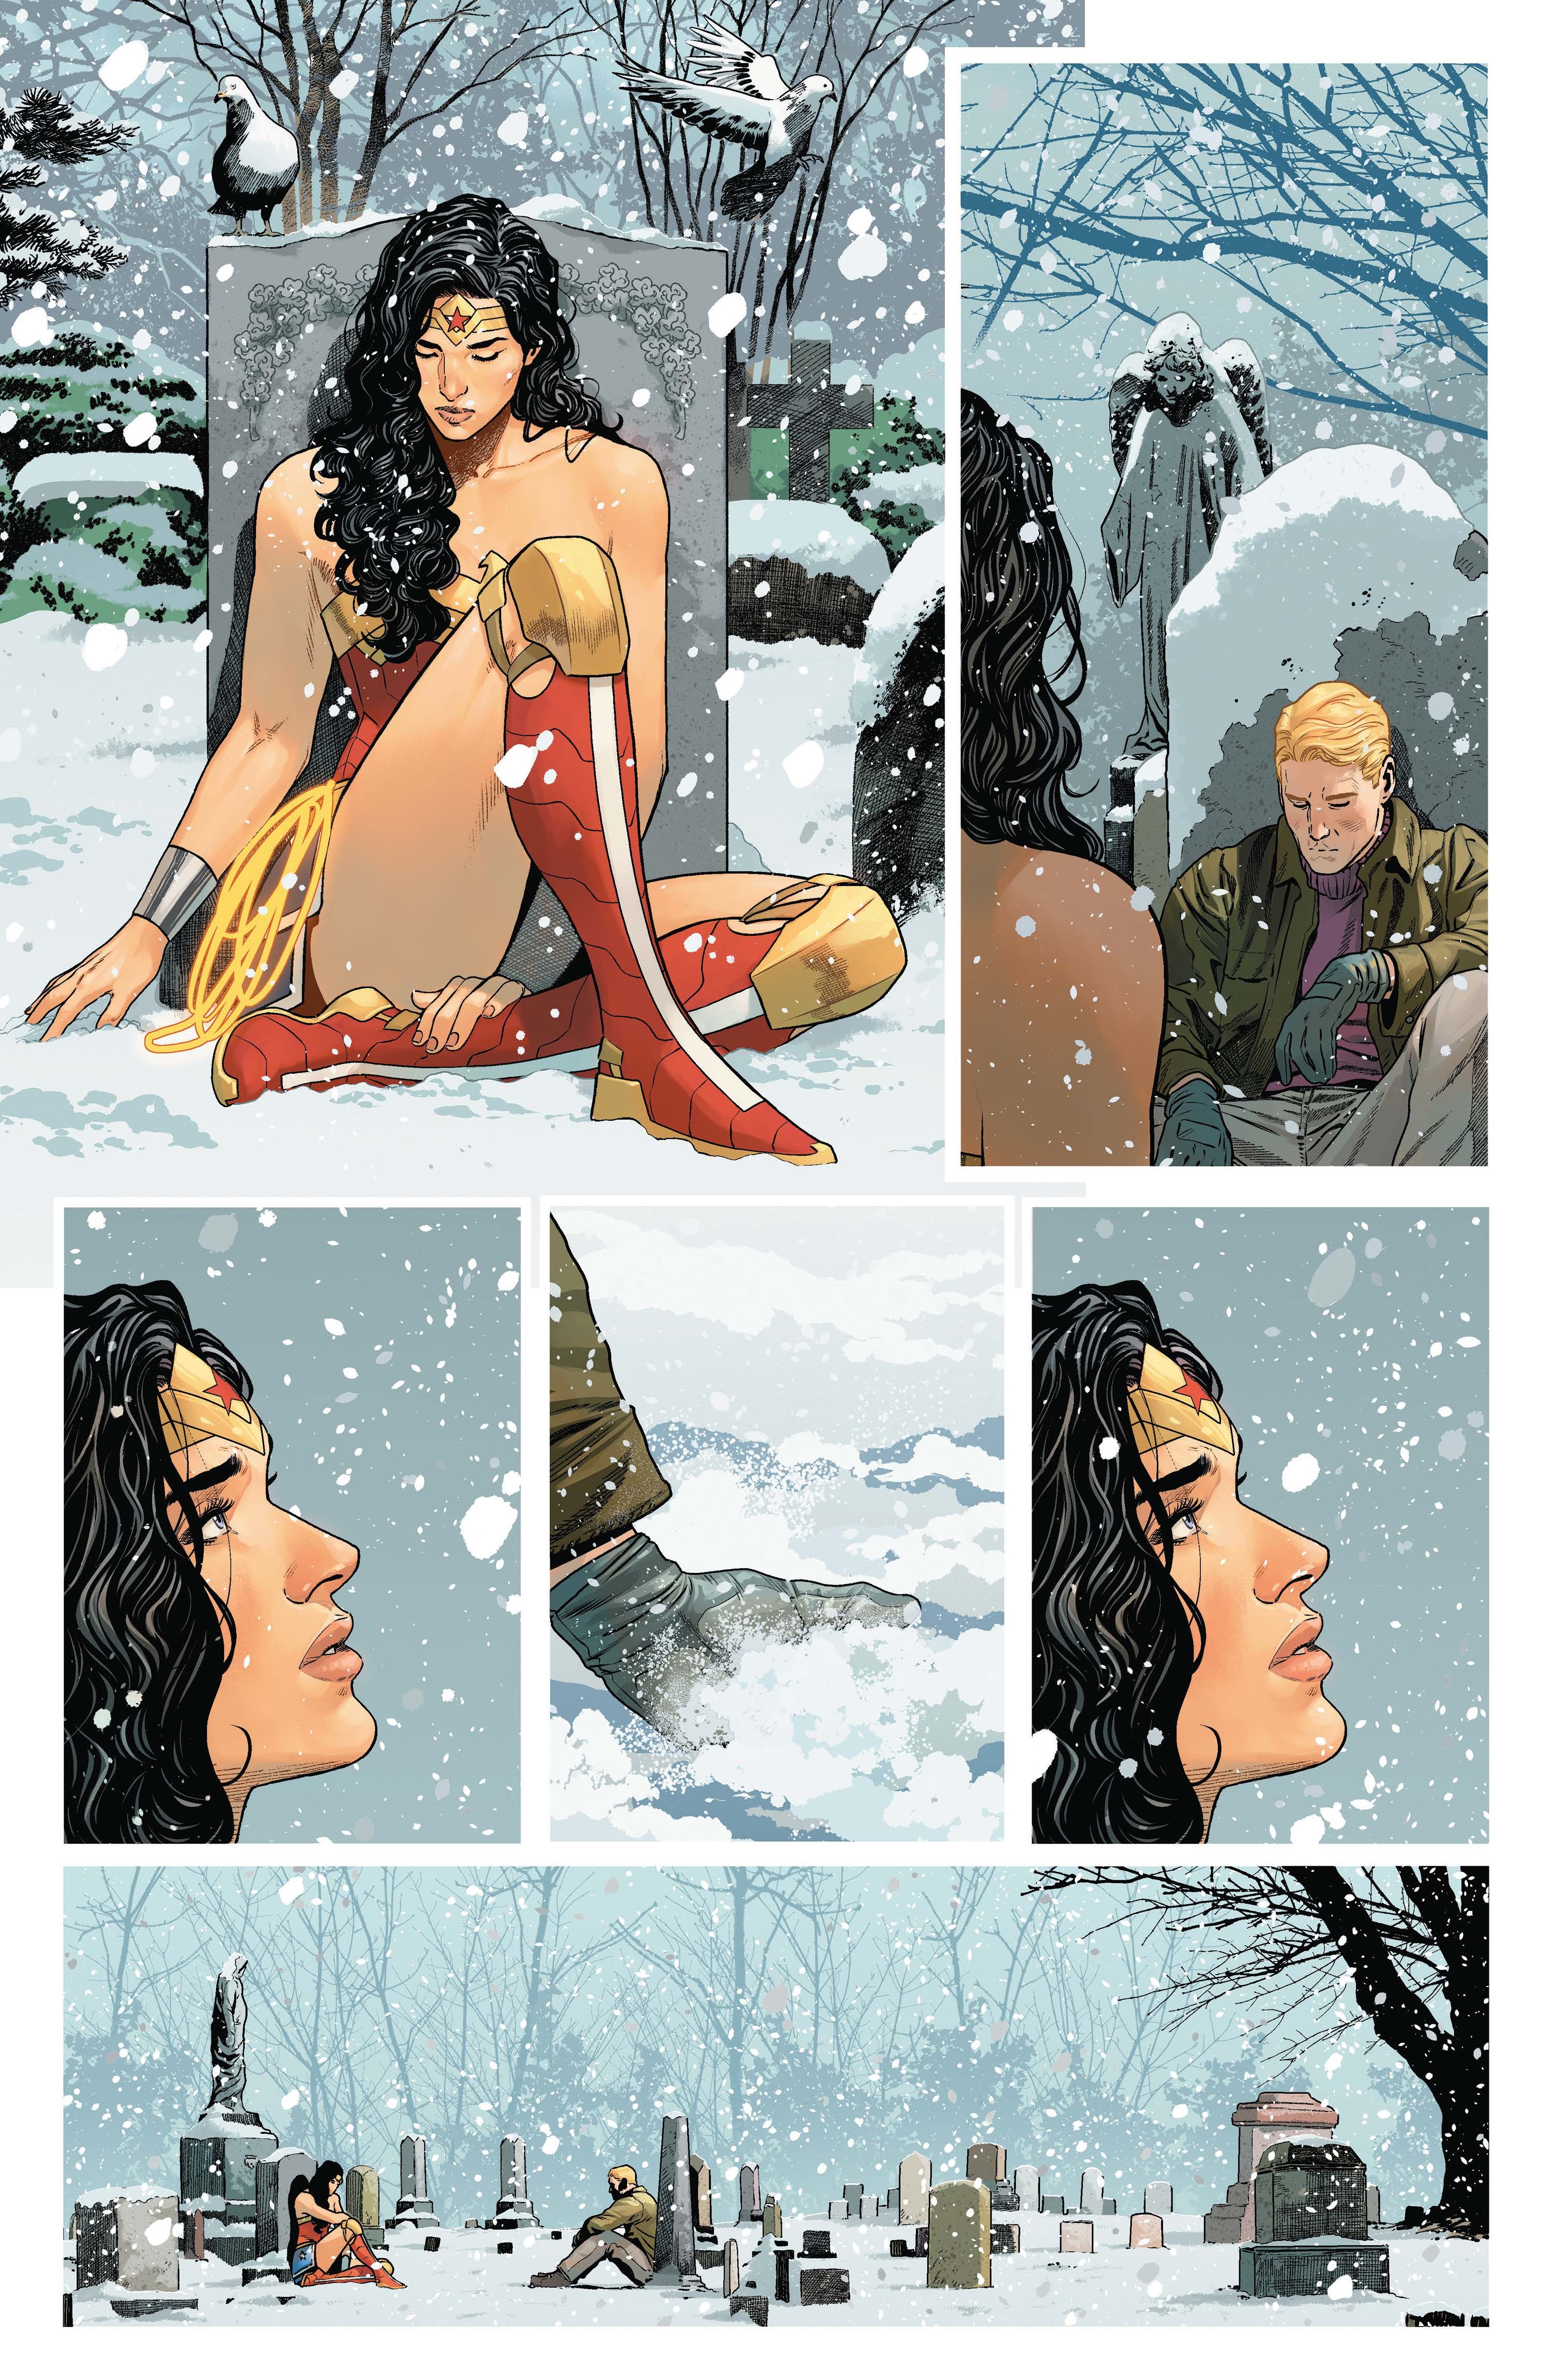 Interiors from Wonder Woman #9.